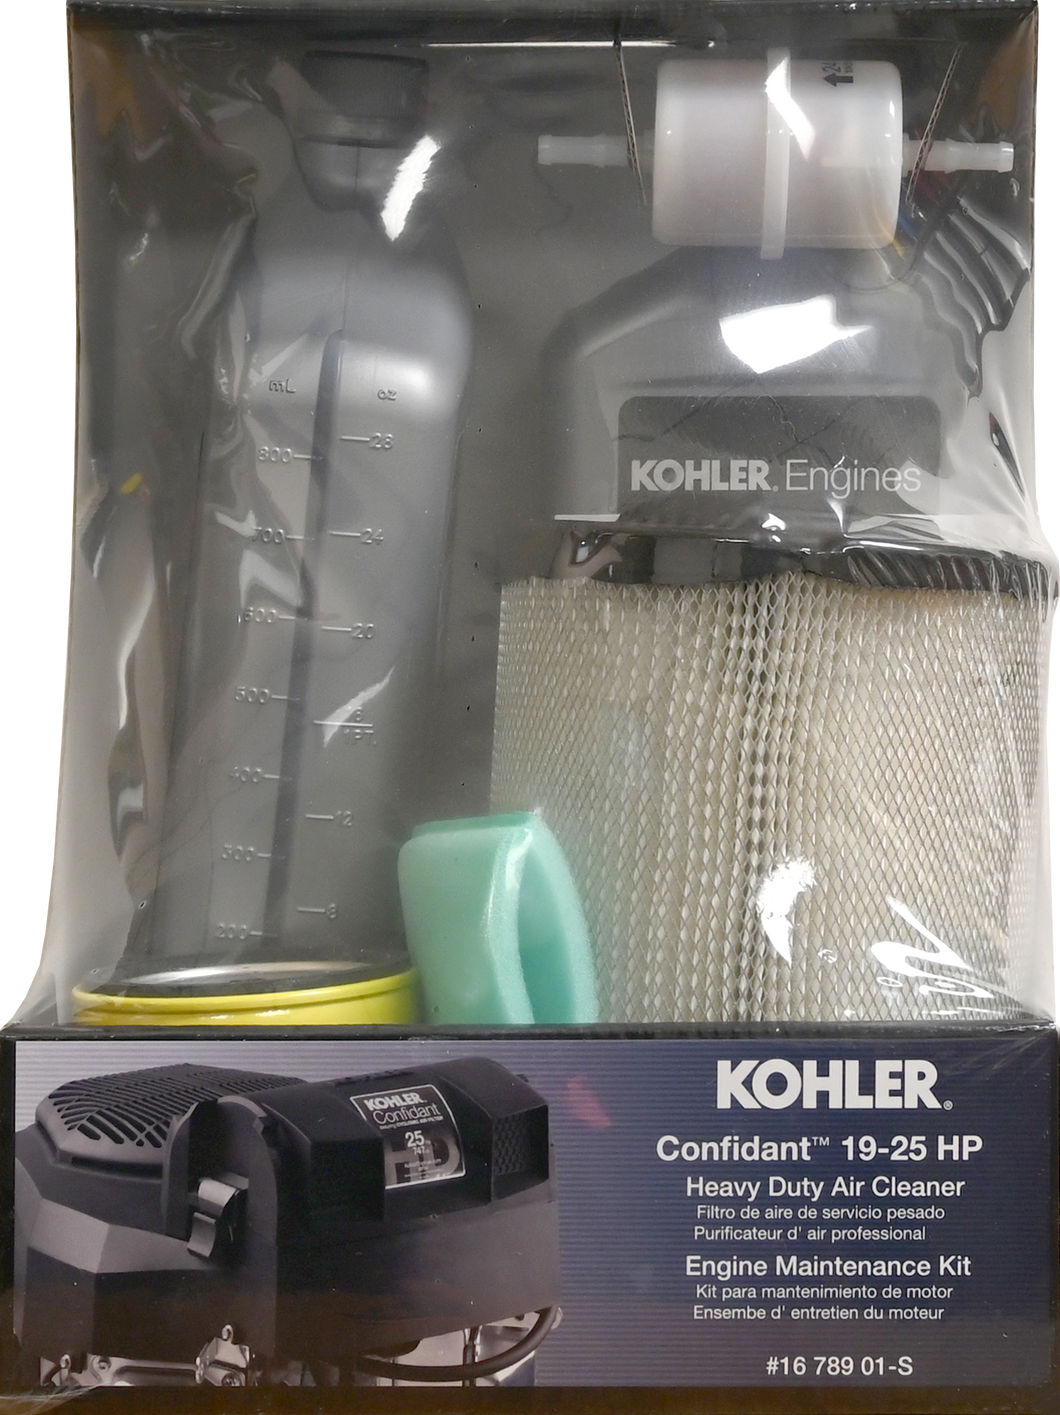 Kohler Engine Maintenance Kit - Confidant 19-25 HP (16 789 01-S)